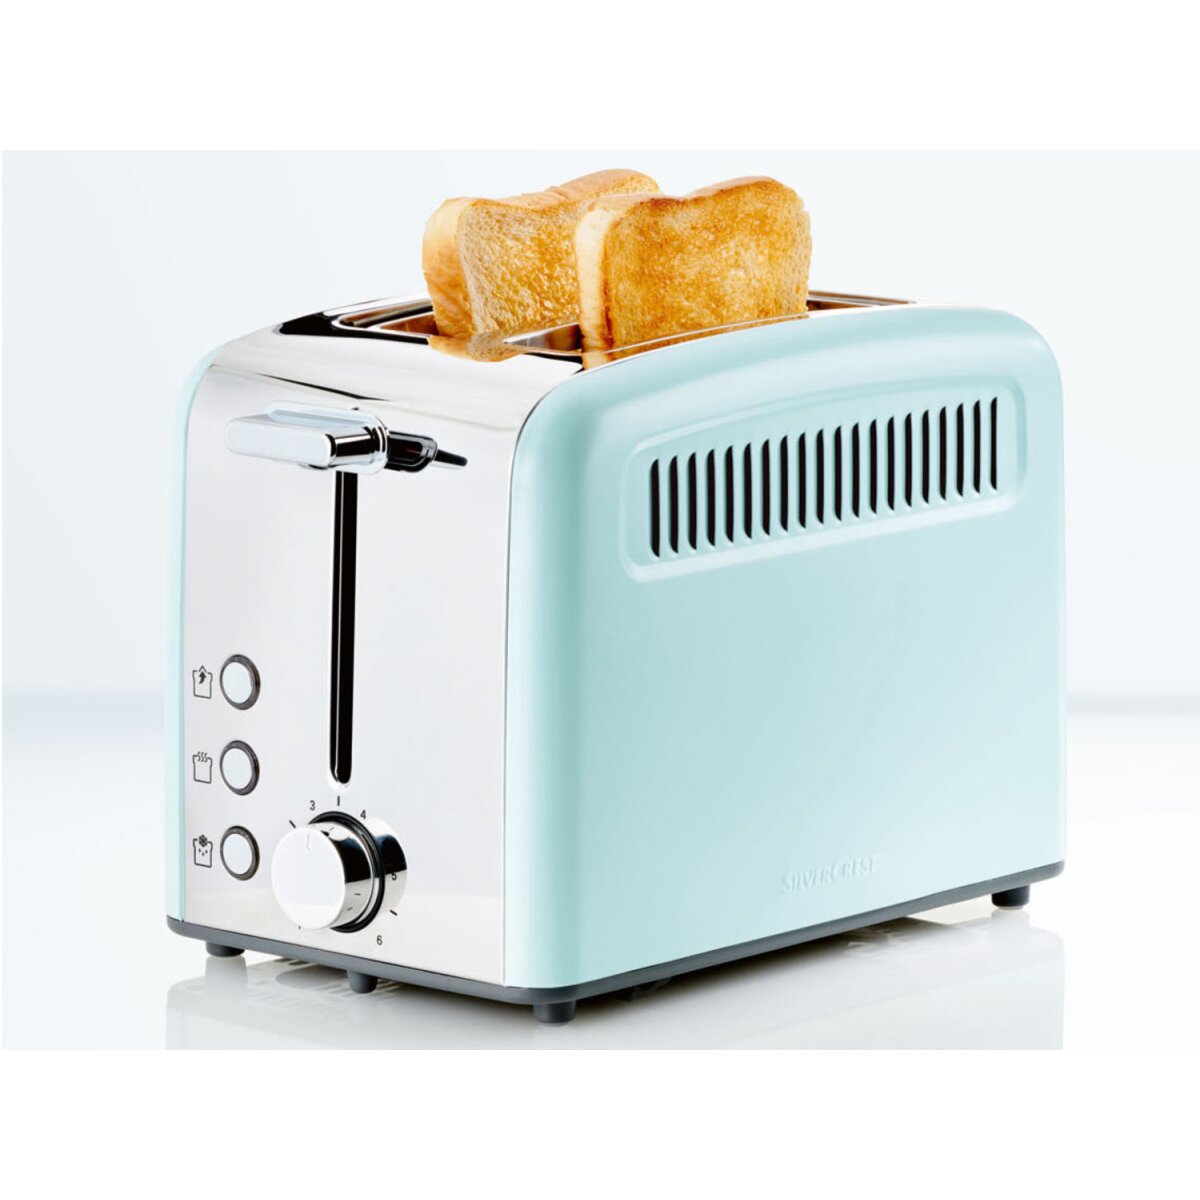 TOOLS W 13,99 950 D3«, - 950 € Ware, »STC KITCHEN Doppleschlitz-Toaster B- SILVERCREST®